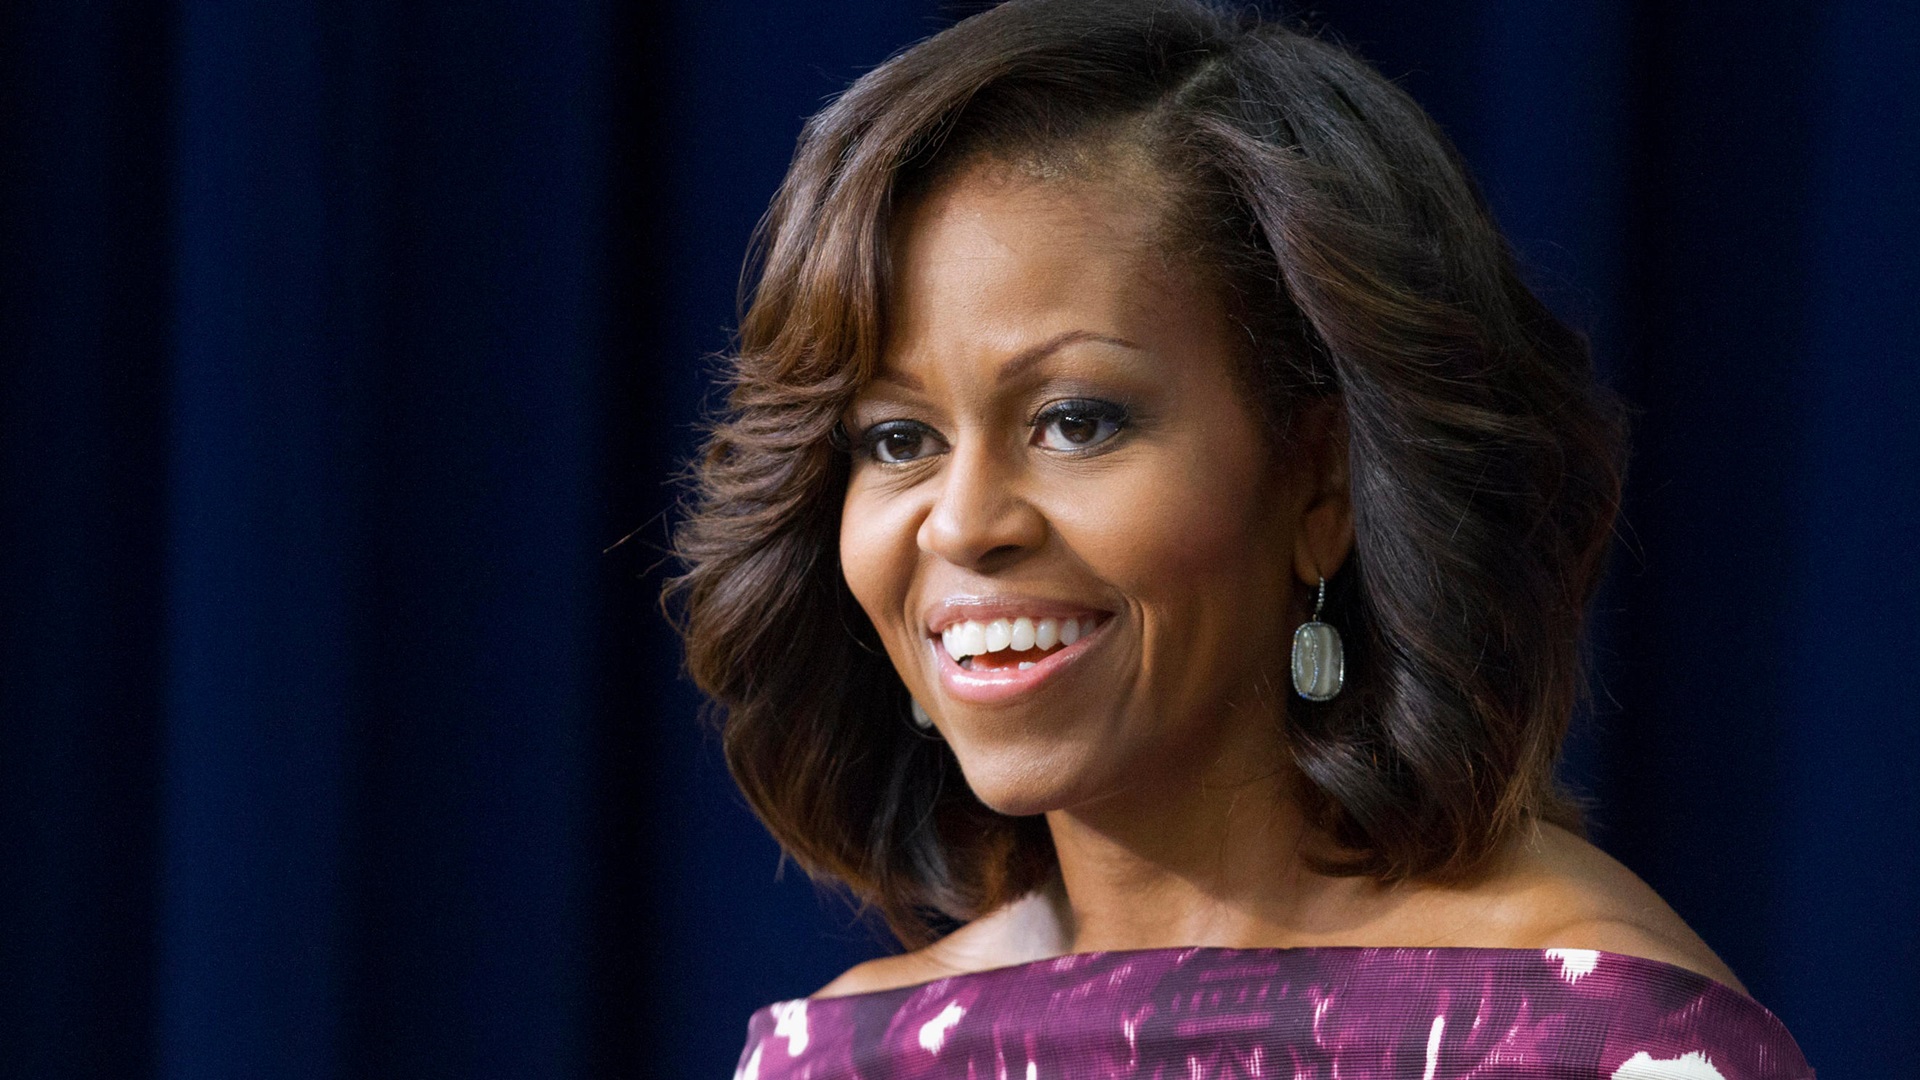 Michelle Obama Wallpaper - WallpaperSafari1920 x 1080